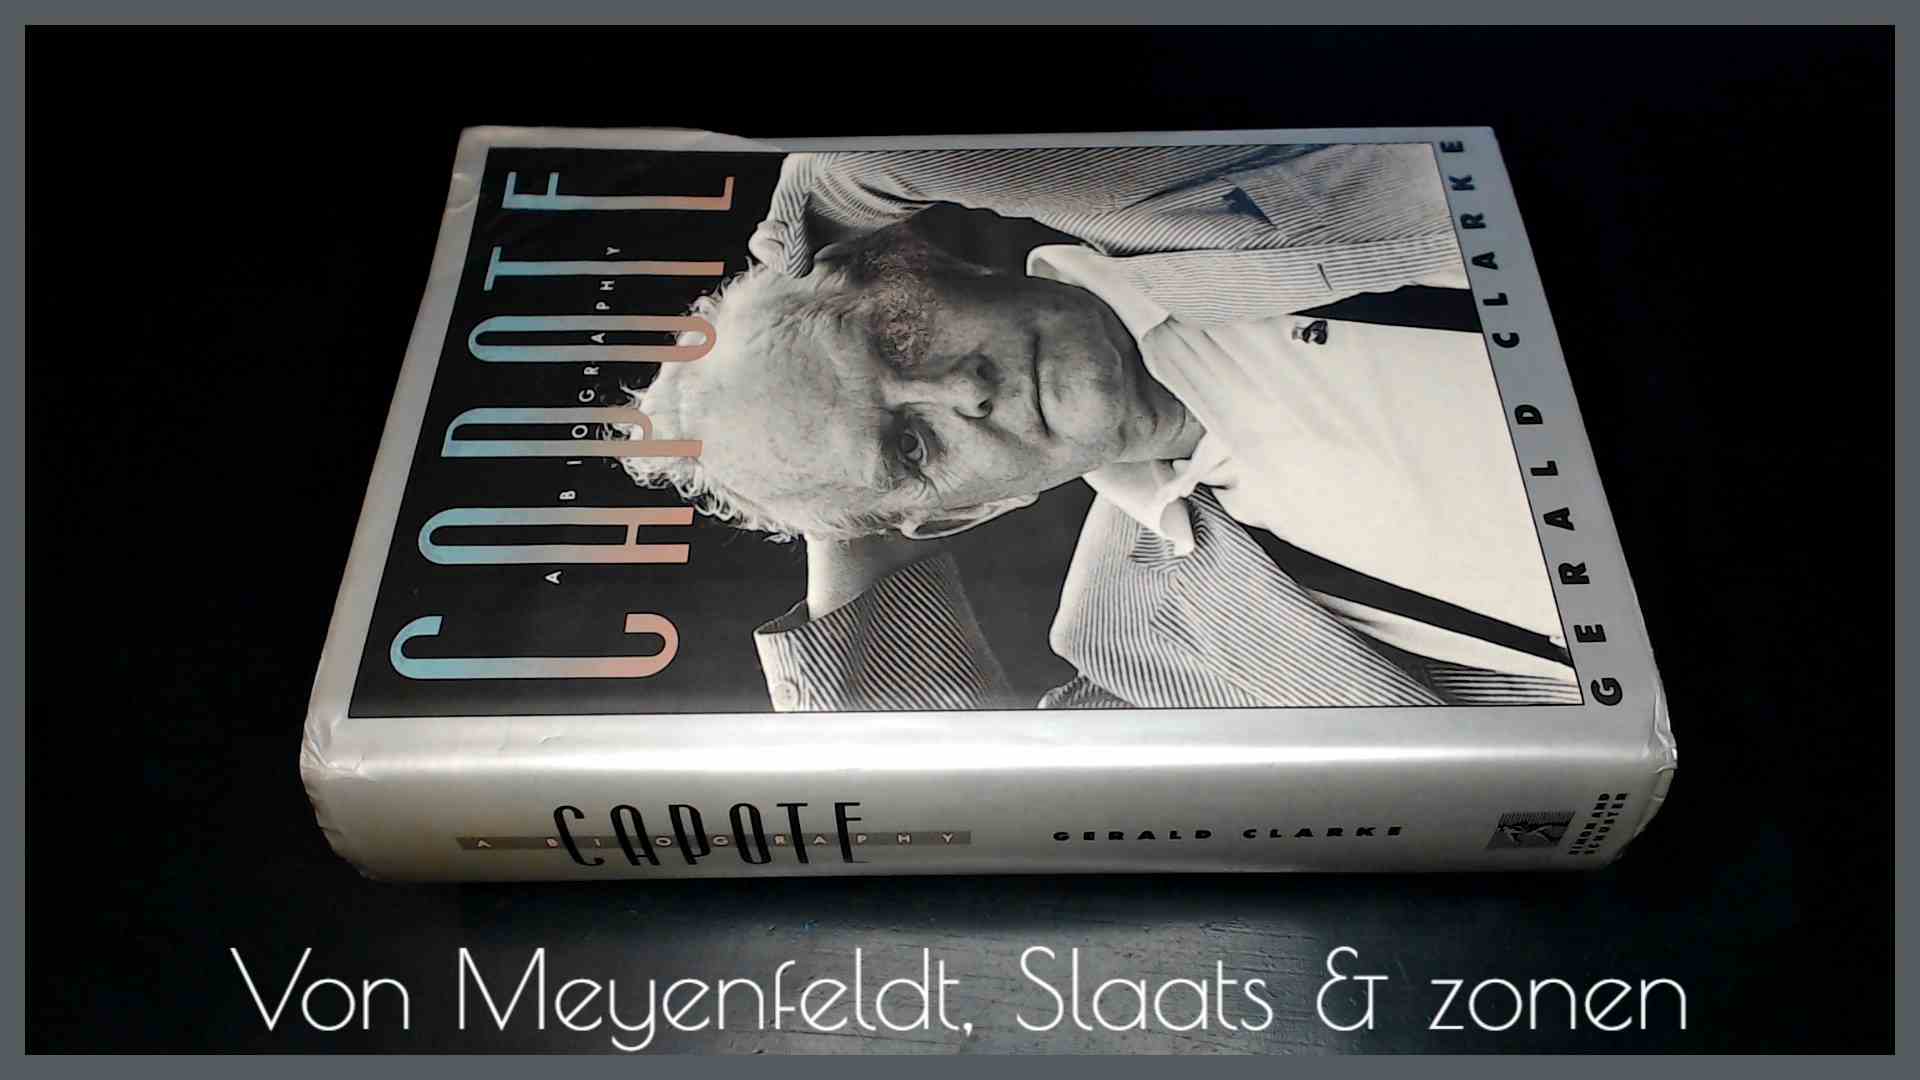 CLARKE, GERALD - Capote - A biography